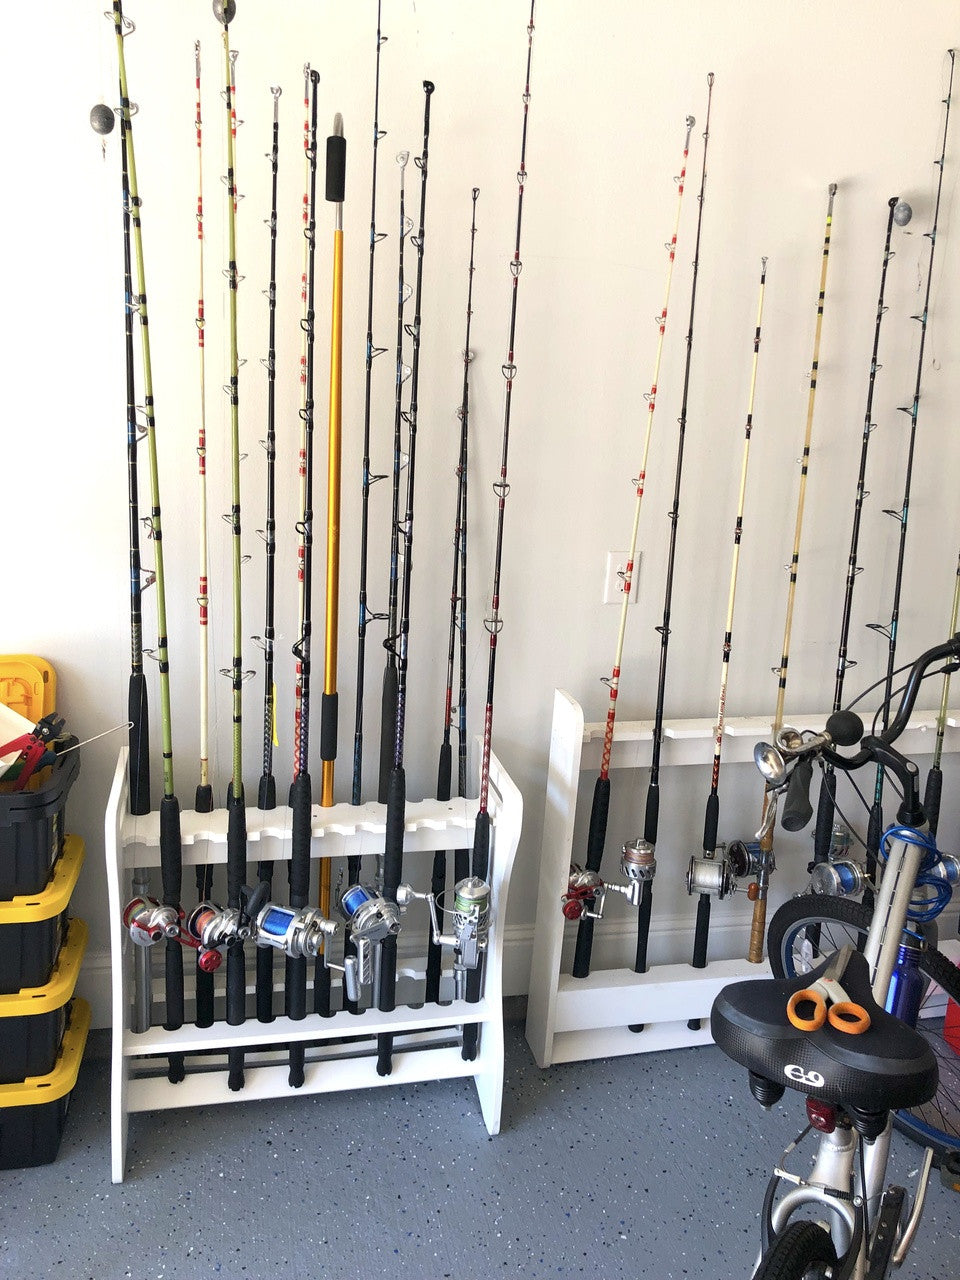 Jorazor Fishing Rod Holders,Fishing Pole Holders,Fishing Rod Rack,24 Slots to Hold Rods & Reel Combo,Lightweight Aluminum Vertical Fish Pole Garage